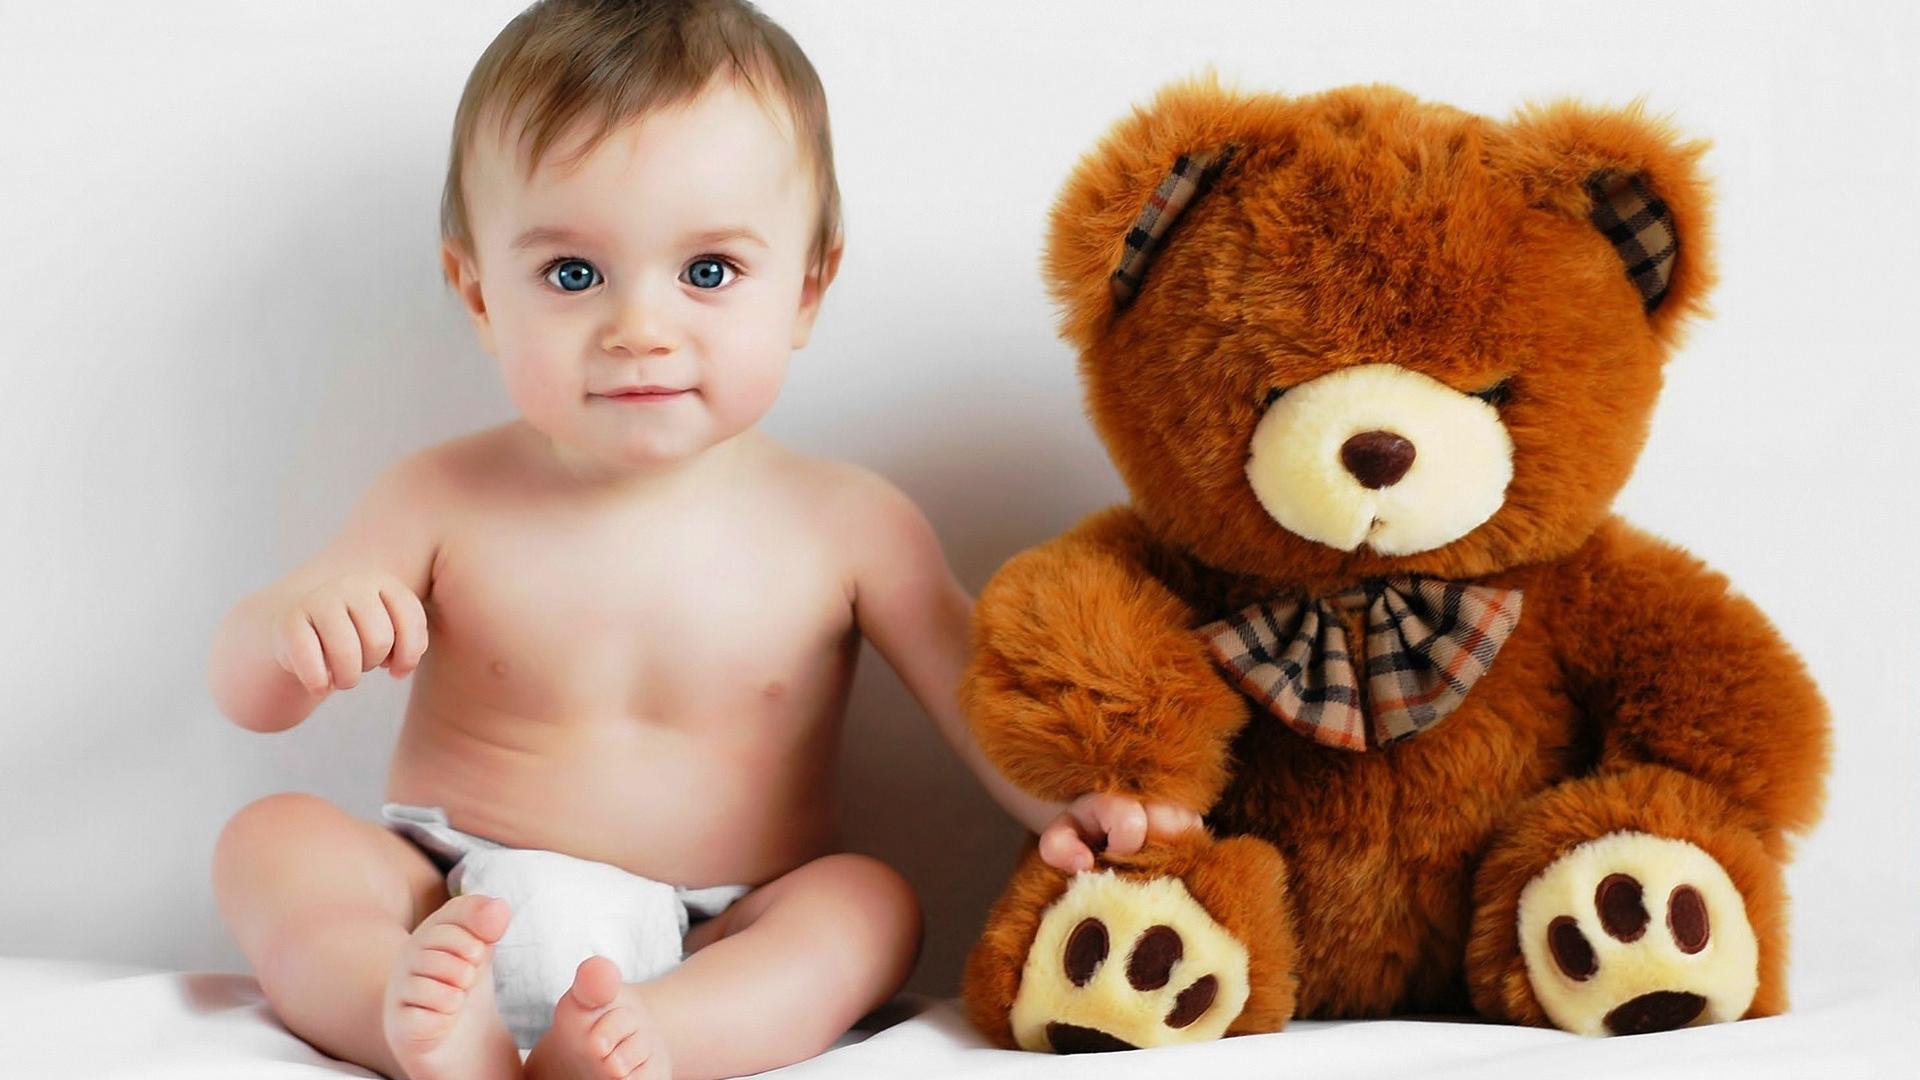 cute baby wallpaper,child,stuffed toy,teddy bear,toy,baby